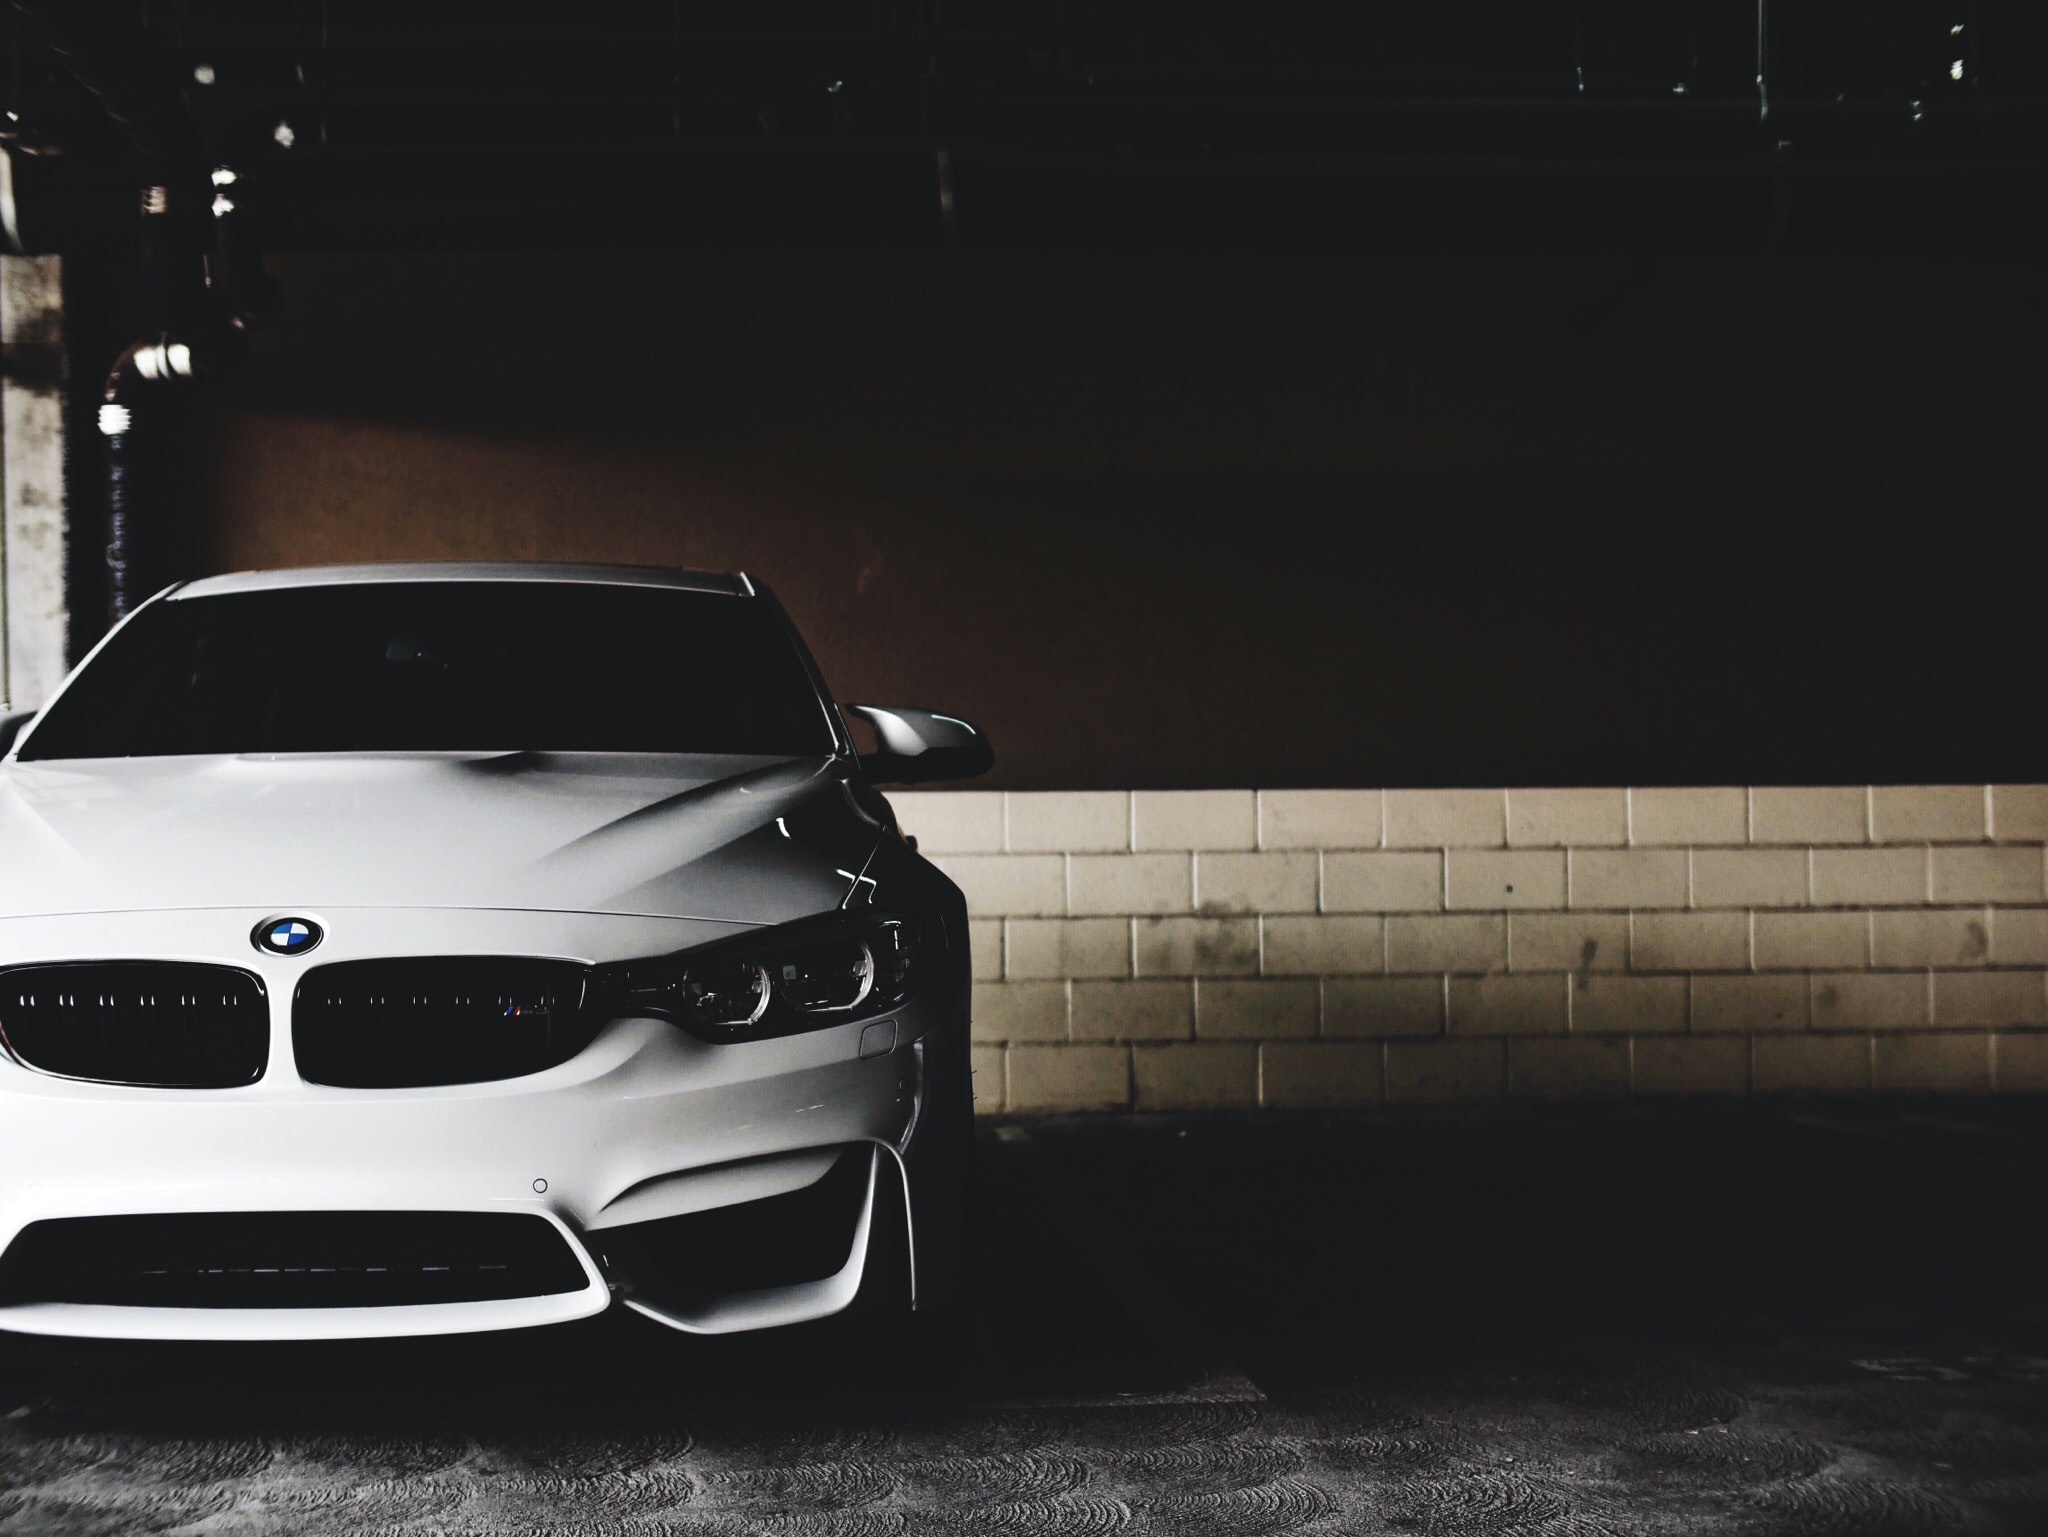 White BMW Series 4 in the Garage